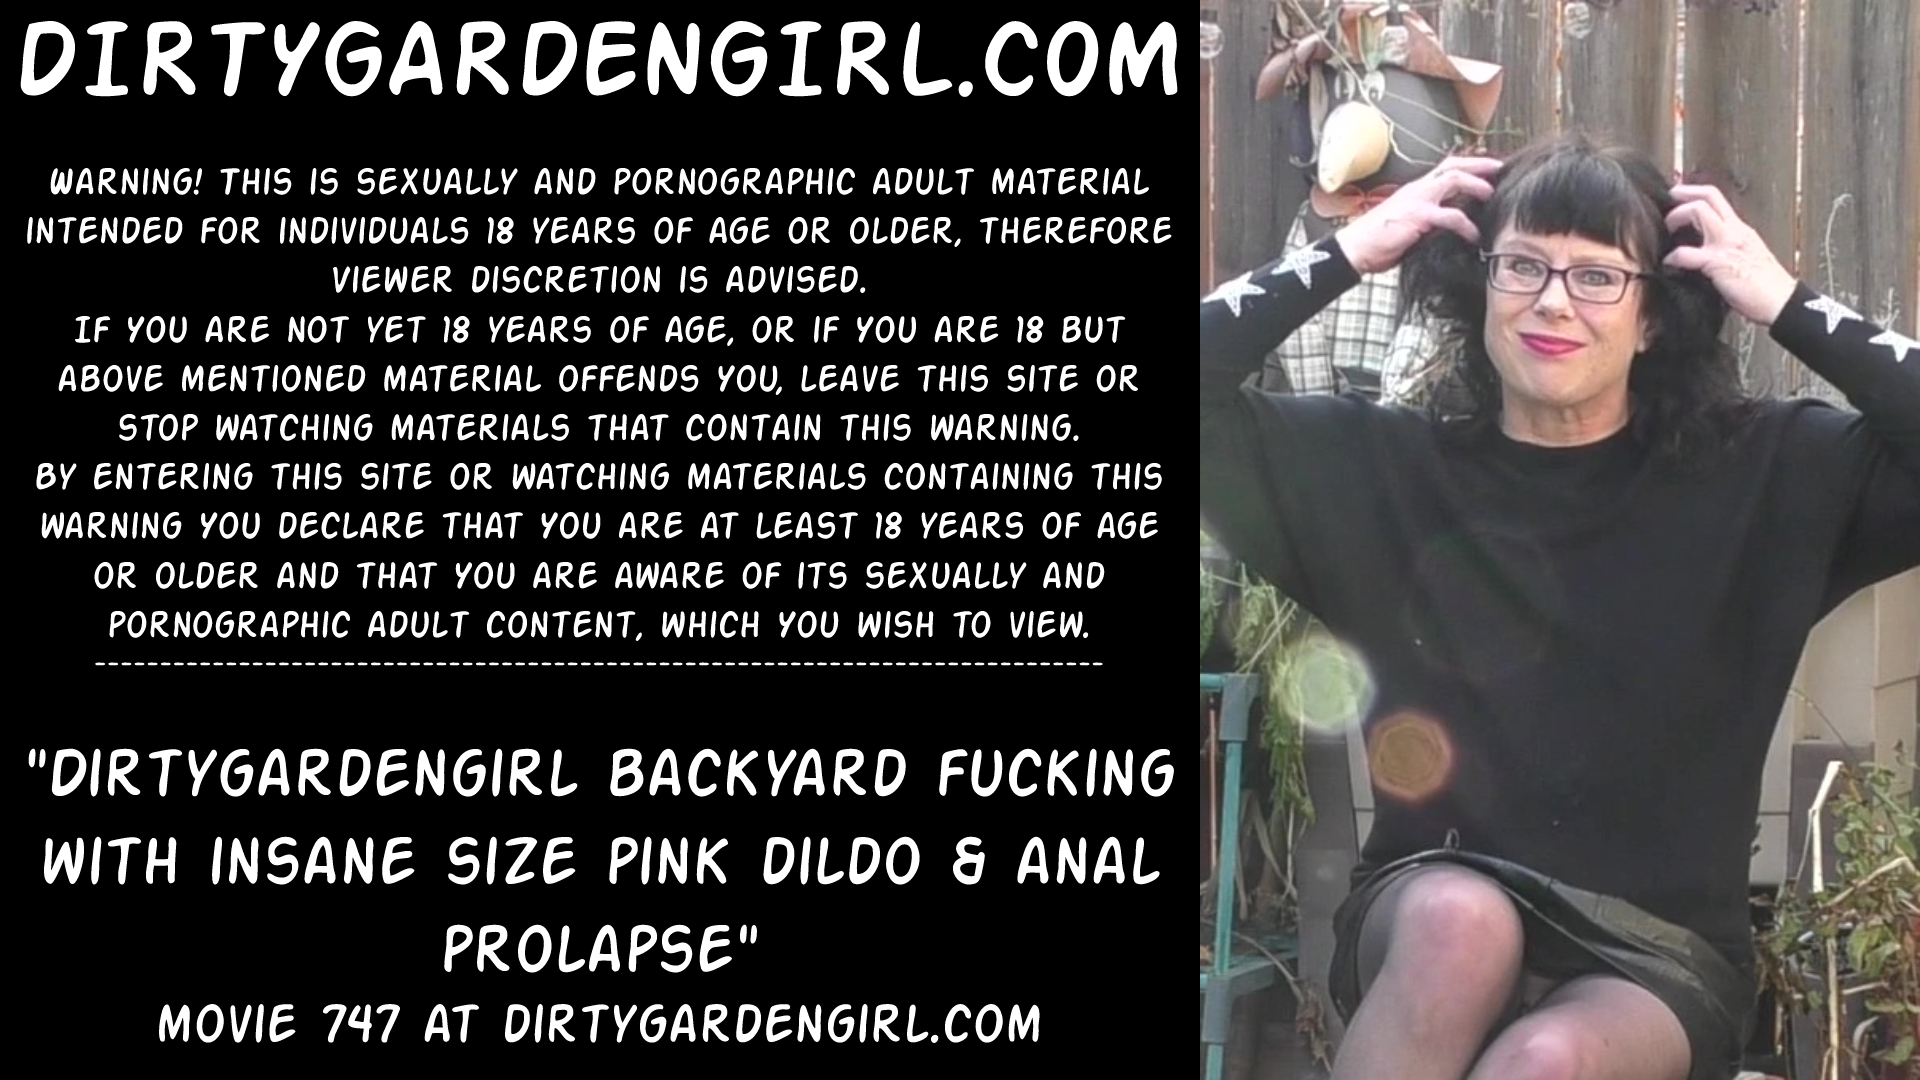 Dirtygardengirl backyard fucking with insane size dildo